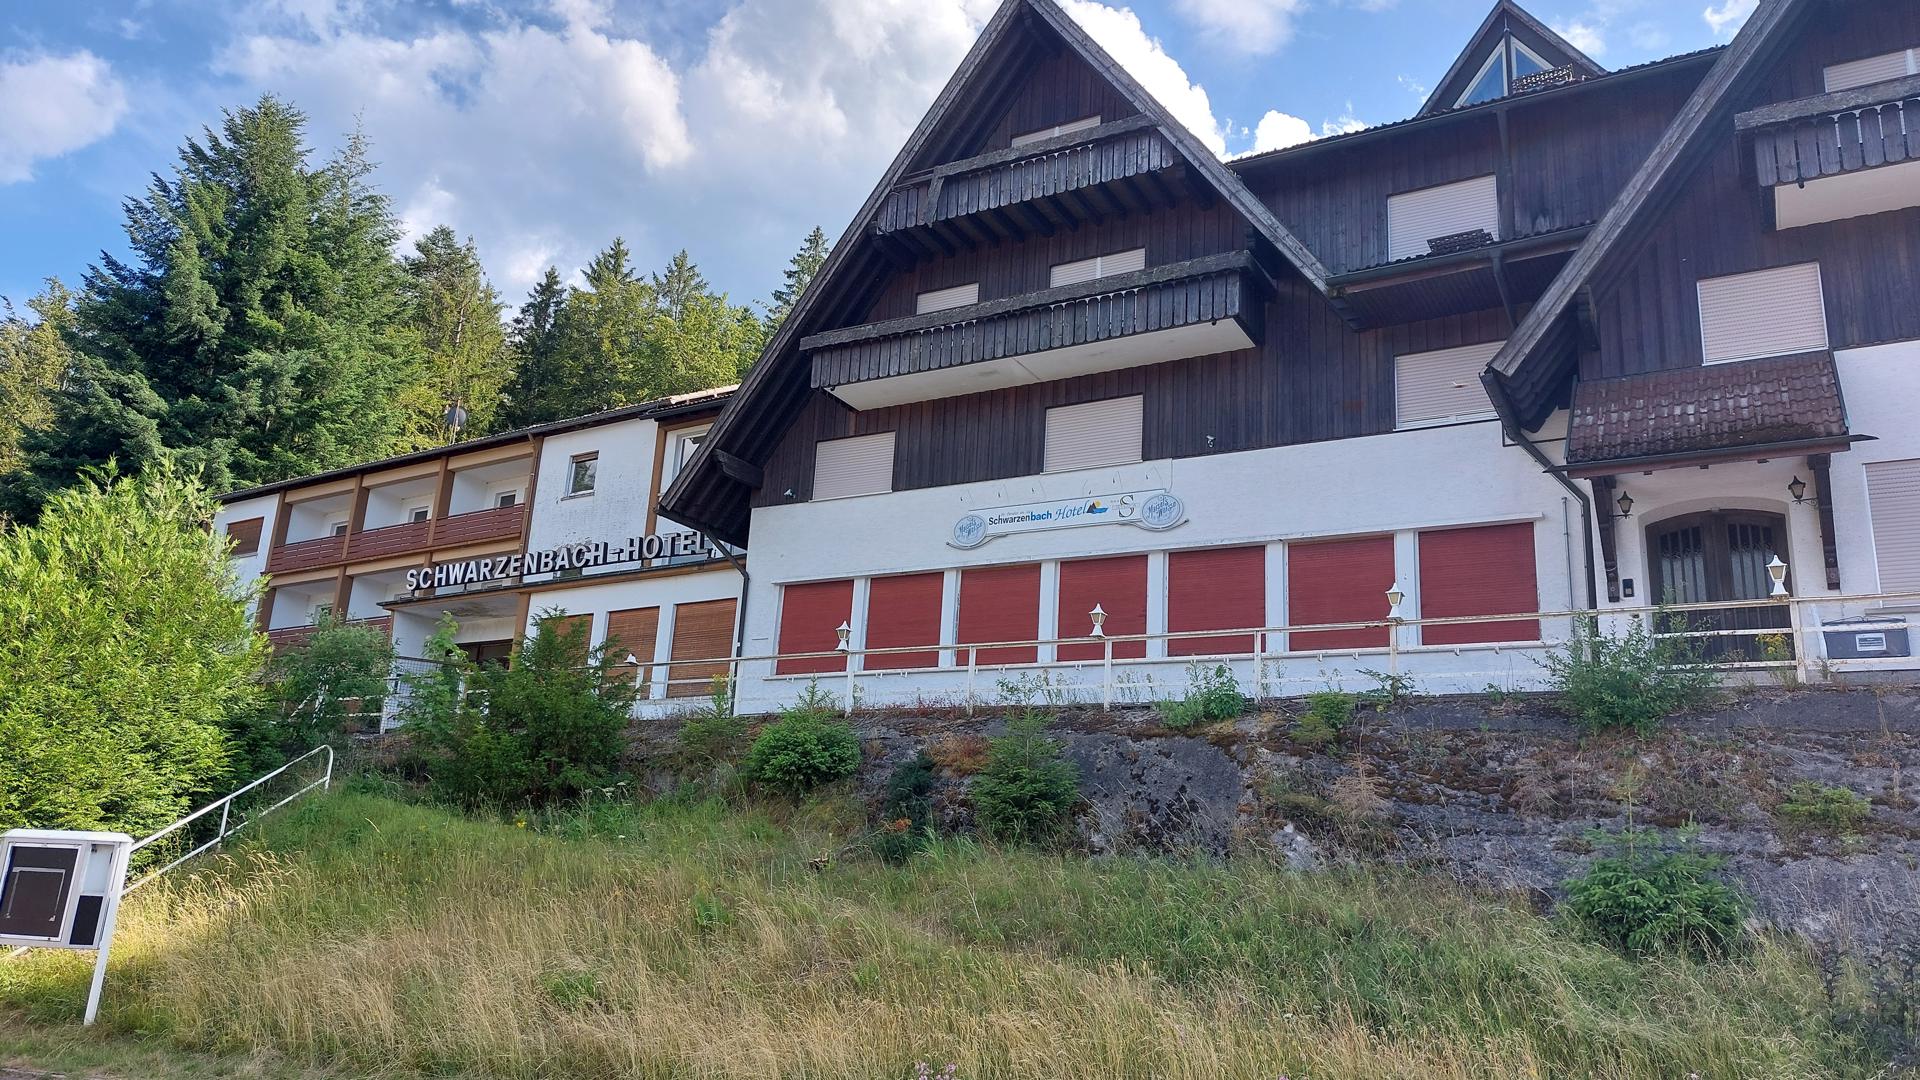 Das Schwarzenbach-Hotel an der Schwarzenbach-Talsperre